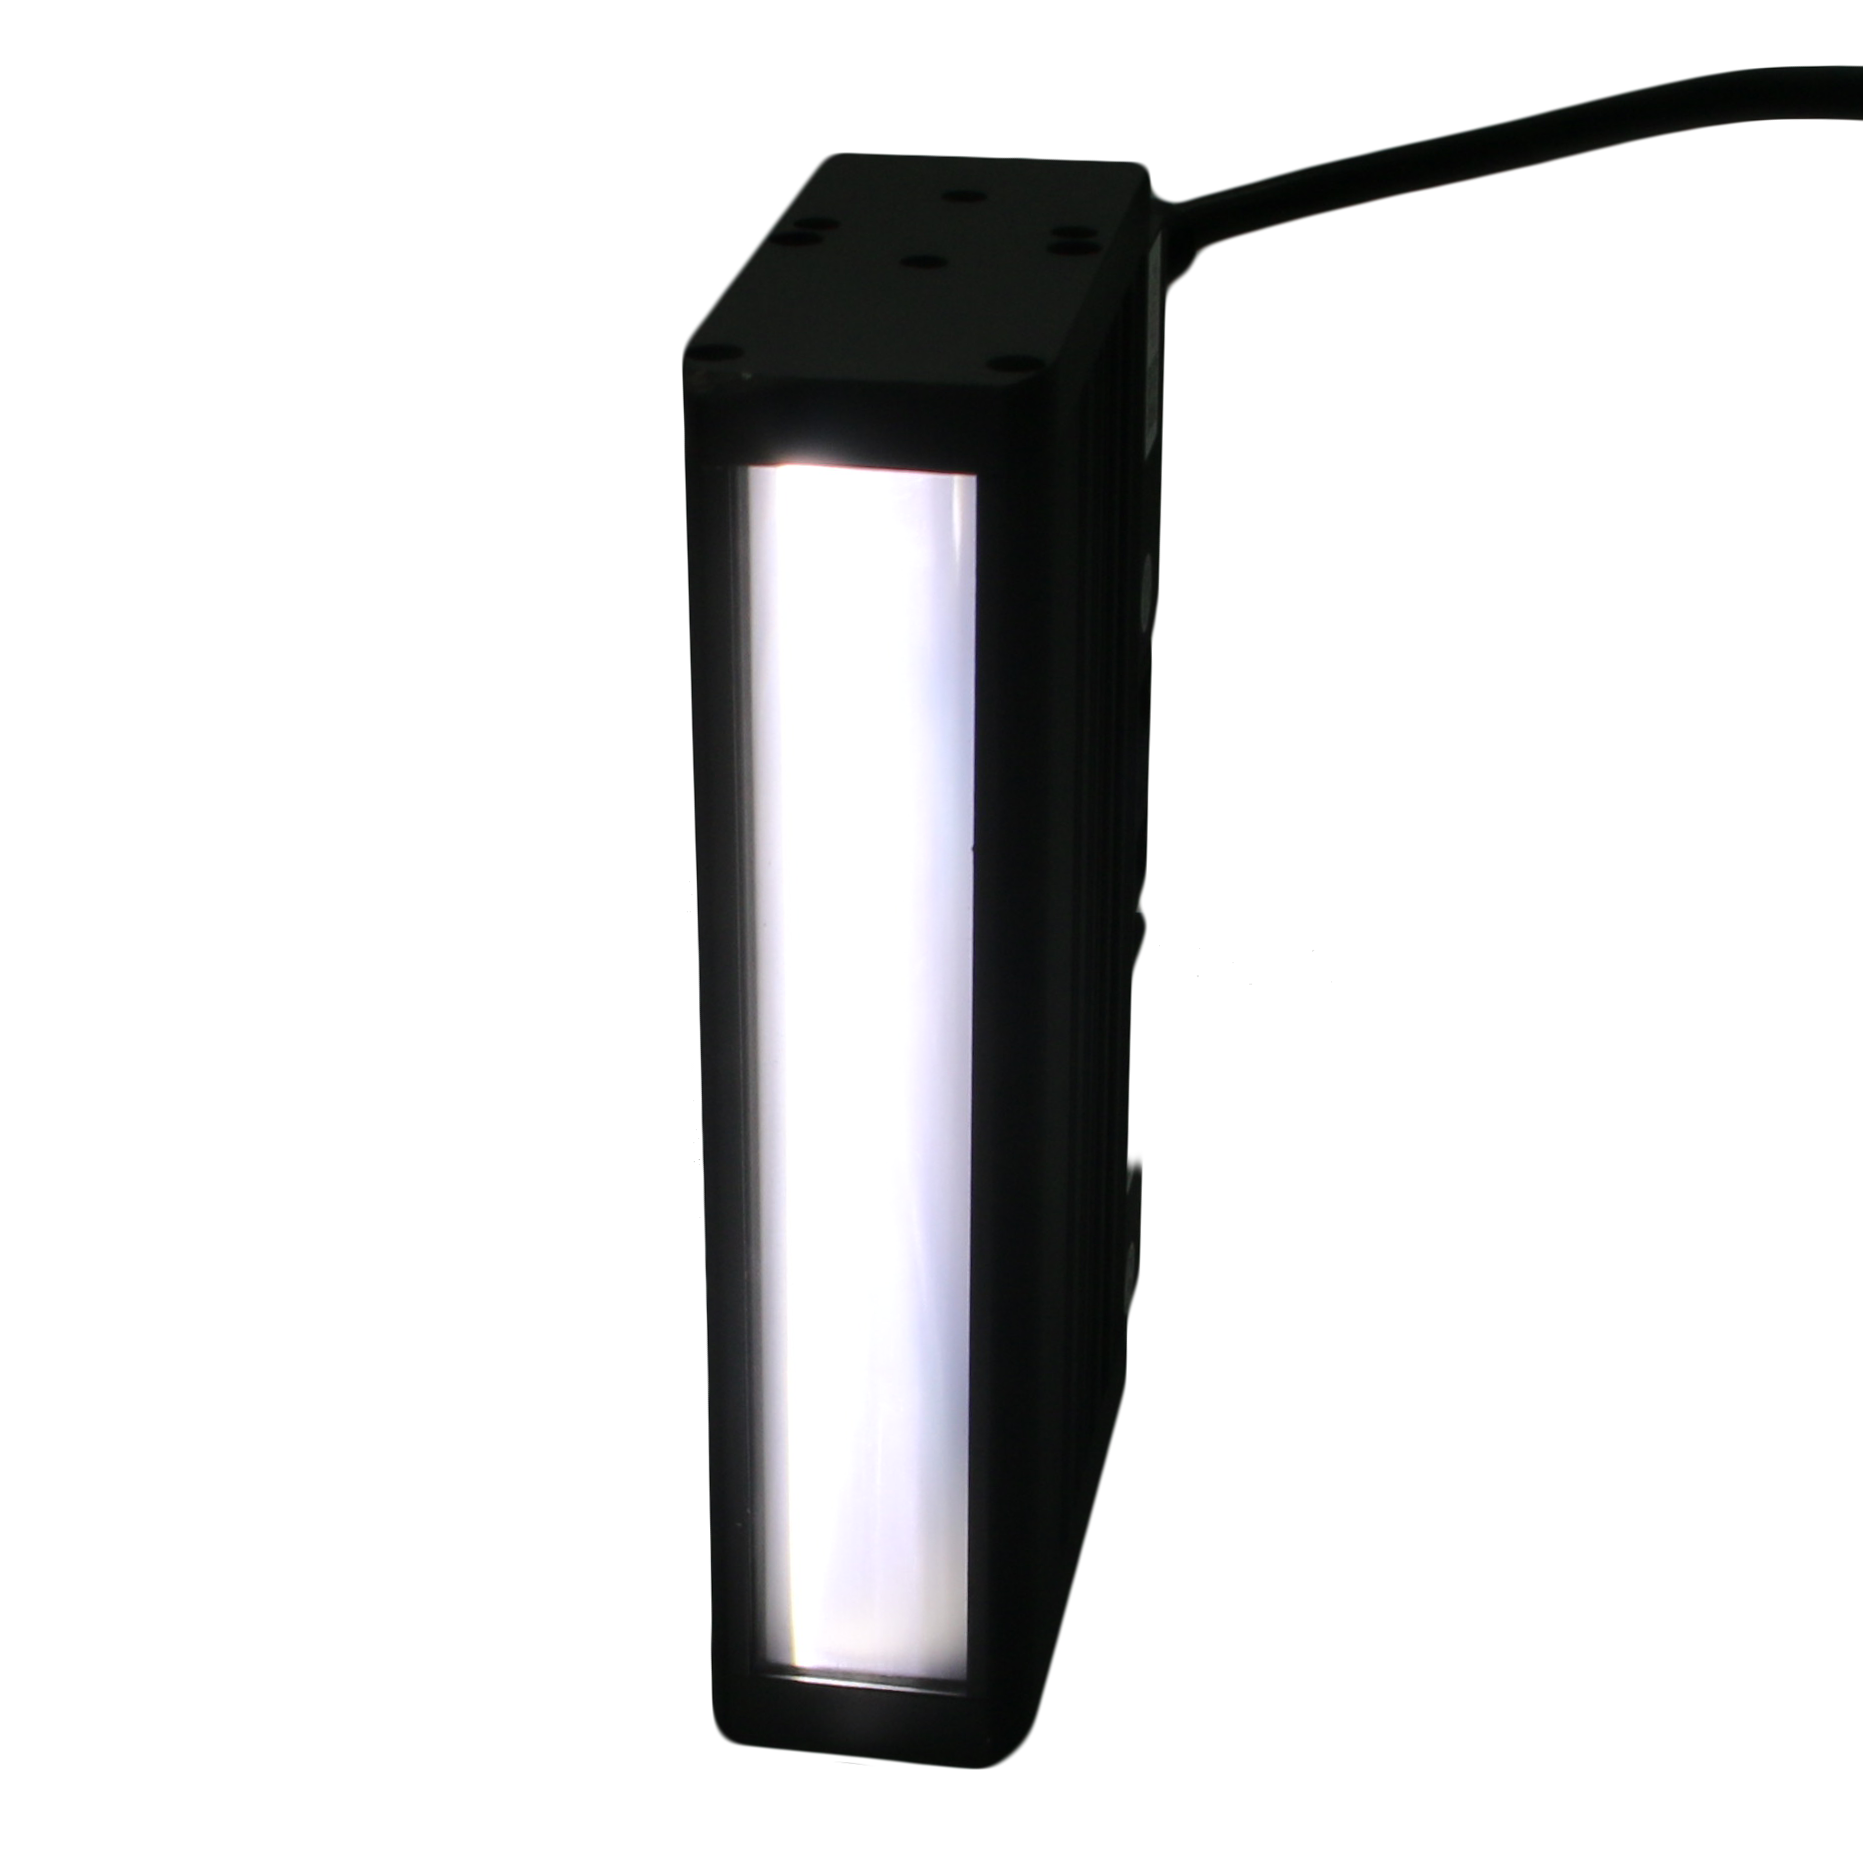 2020 innovation LED High brightness line scan light Visual Inspection Light work lighting for industrial inspection